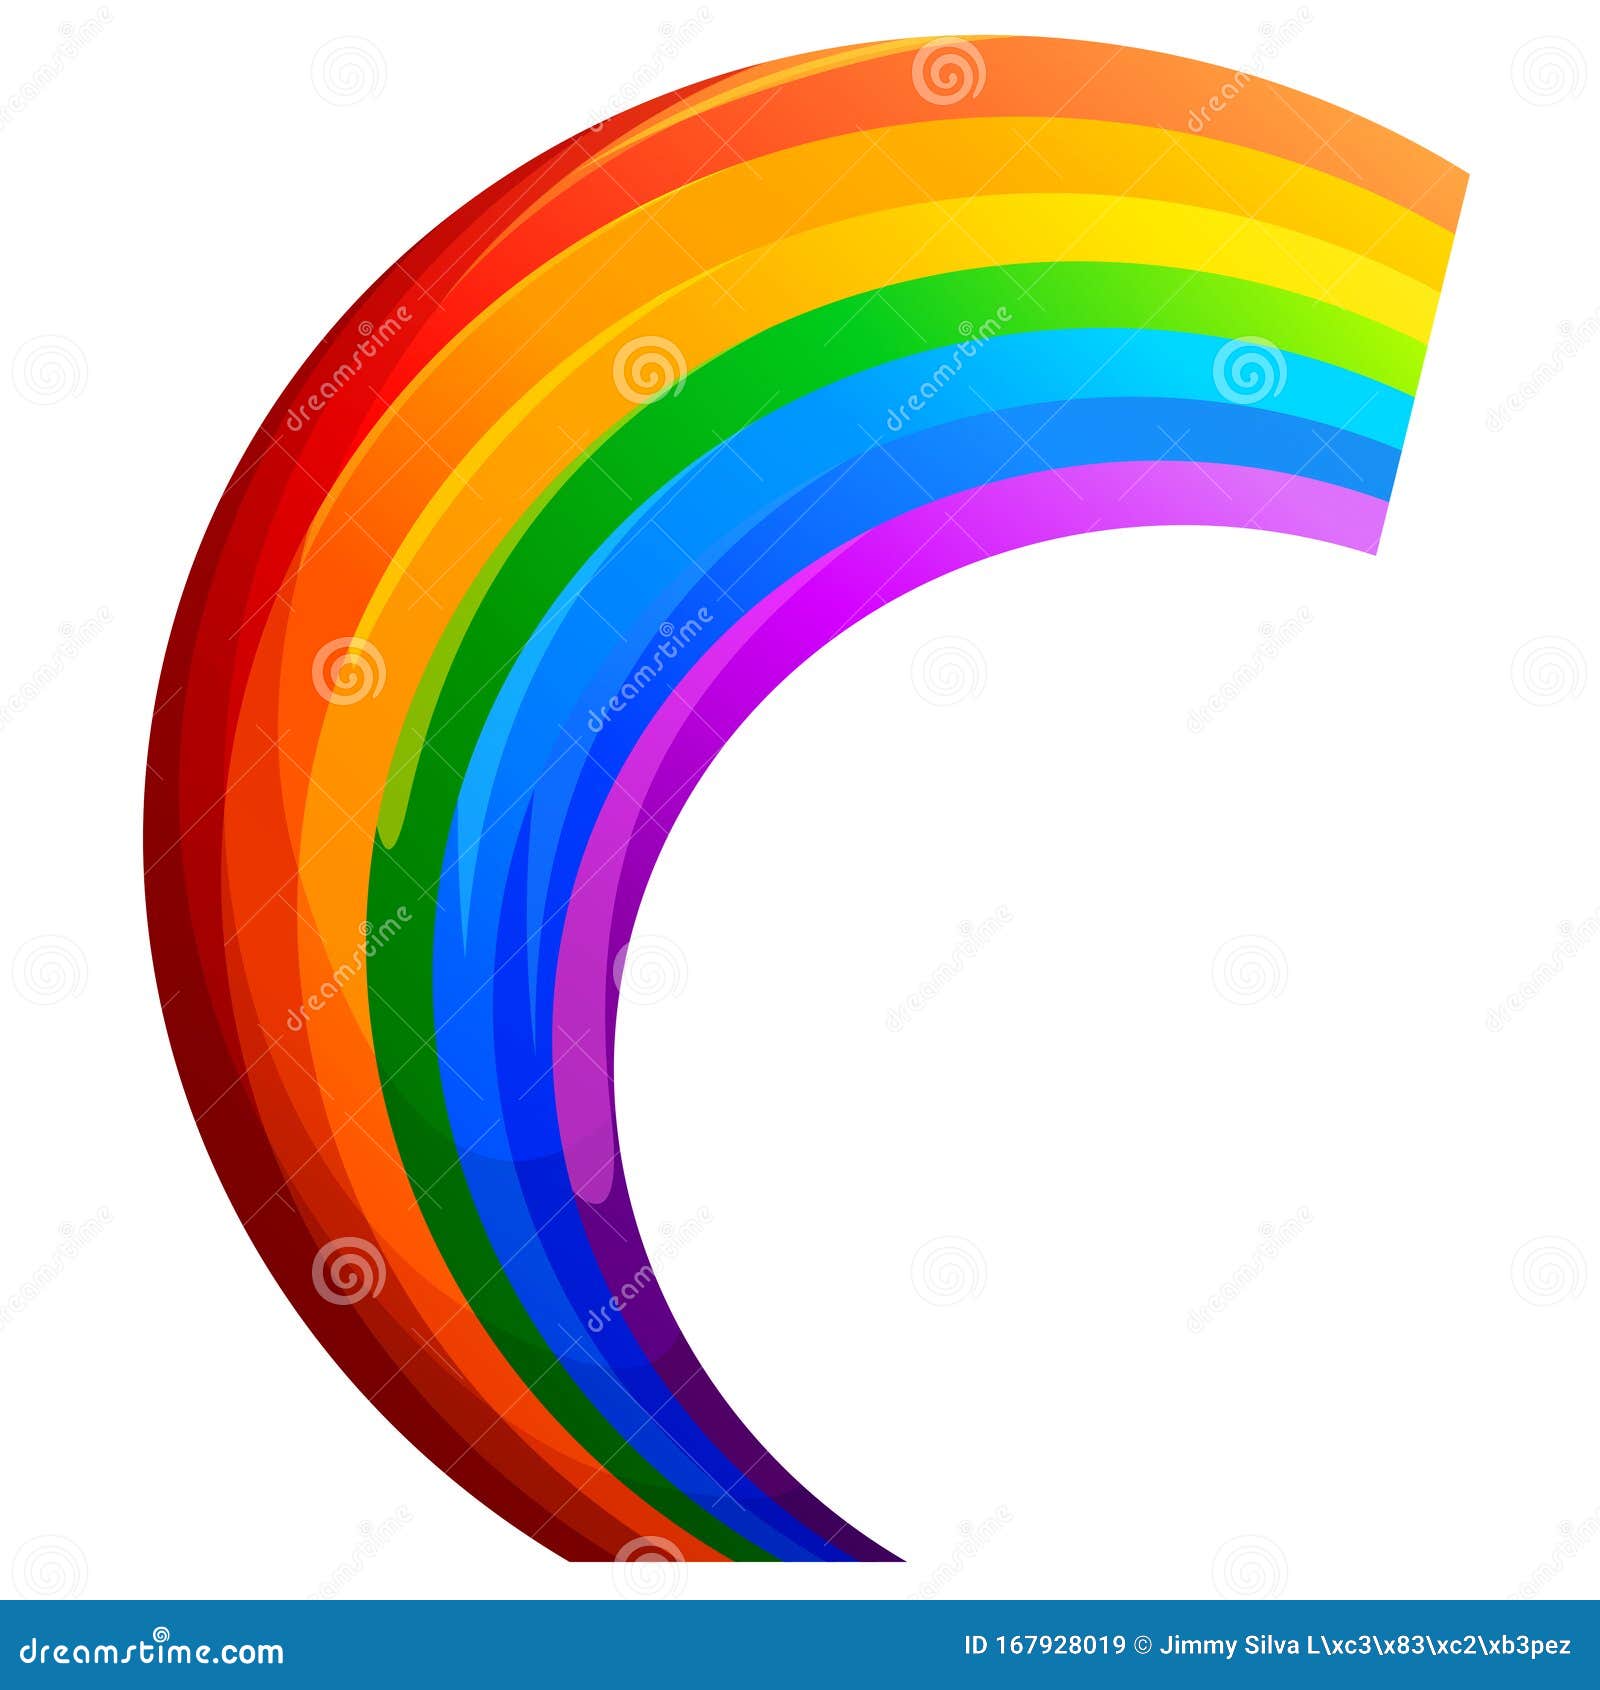 nice rainbow with beautiful colors